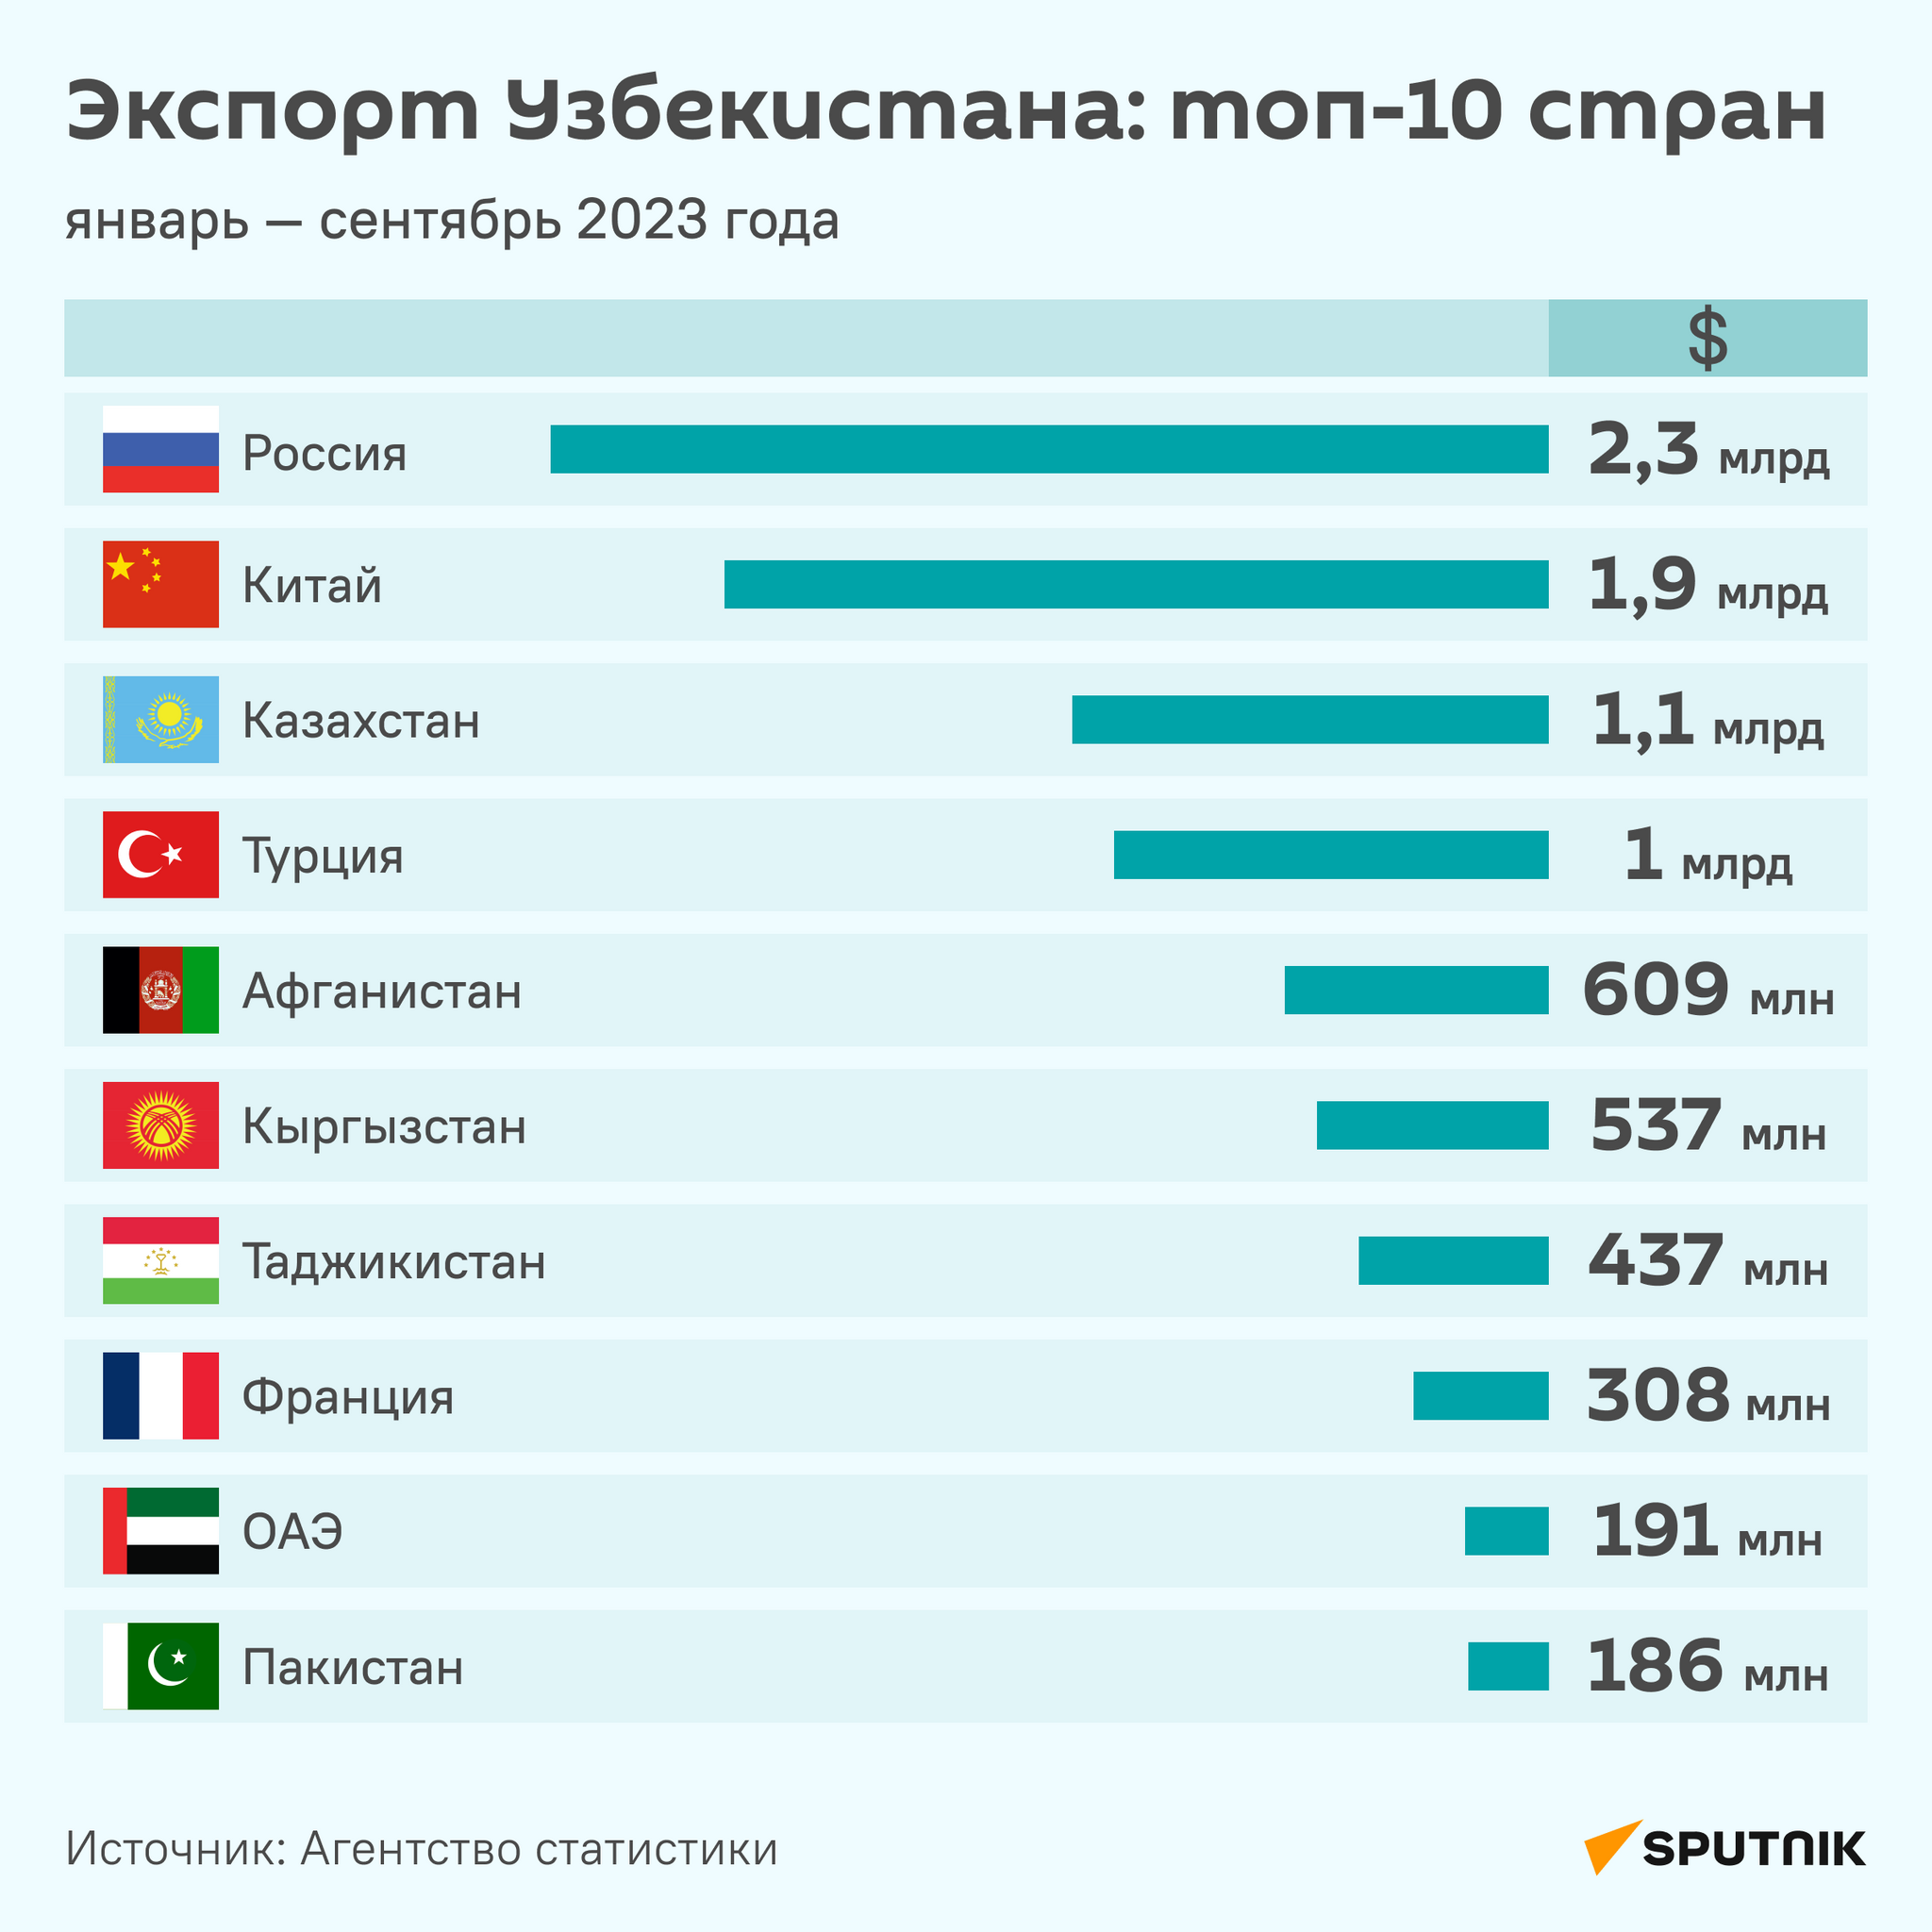 Экспорт Узбекистана: топ-10 стран за январь-сентябрь 2023 года - Sputnik Узбекистан